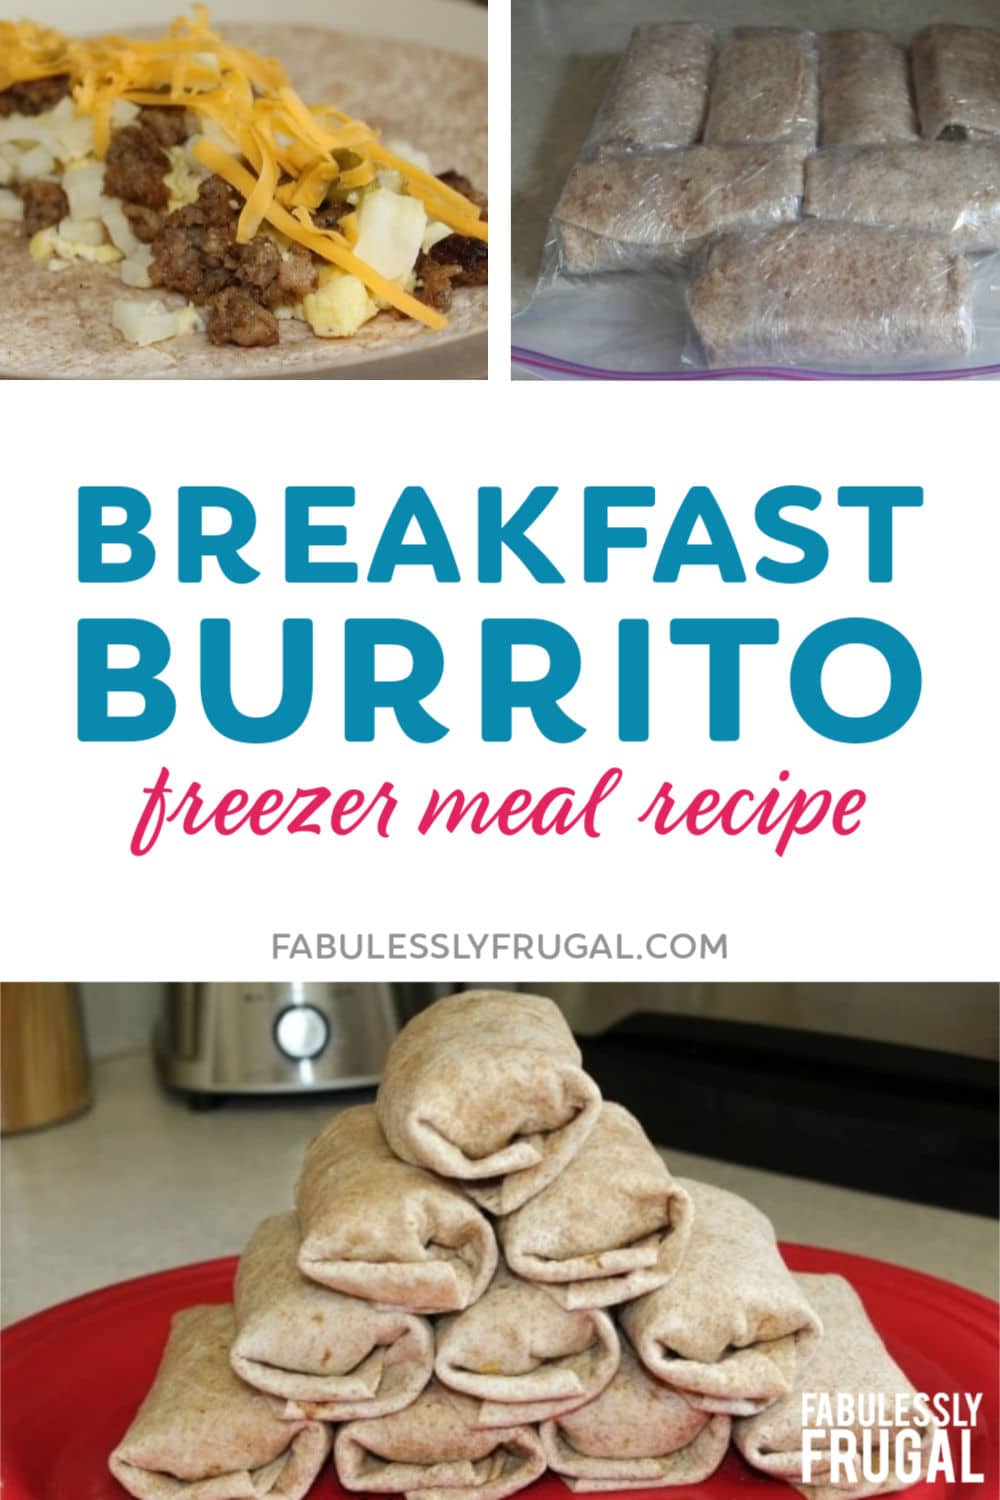 Breakfast burrito freezer meal recipe